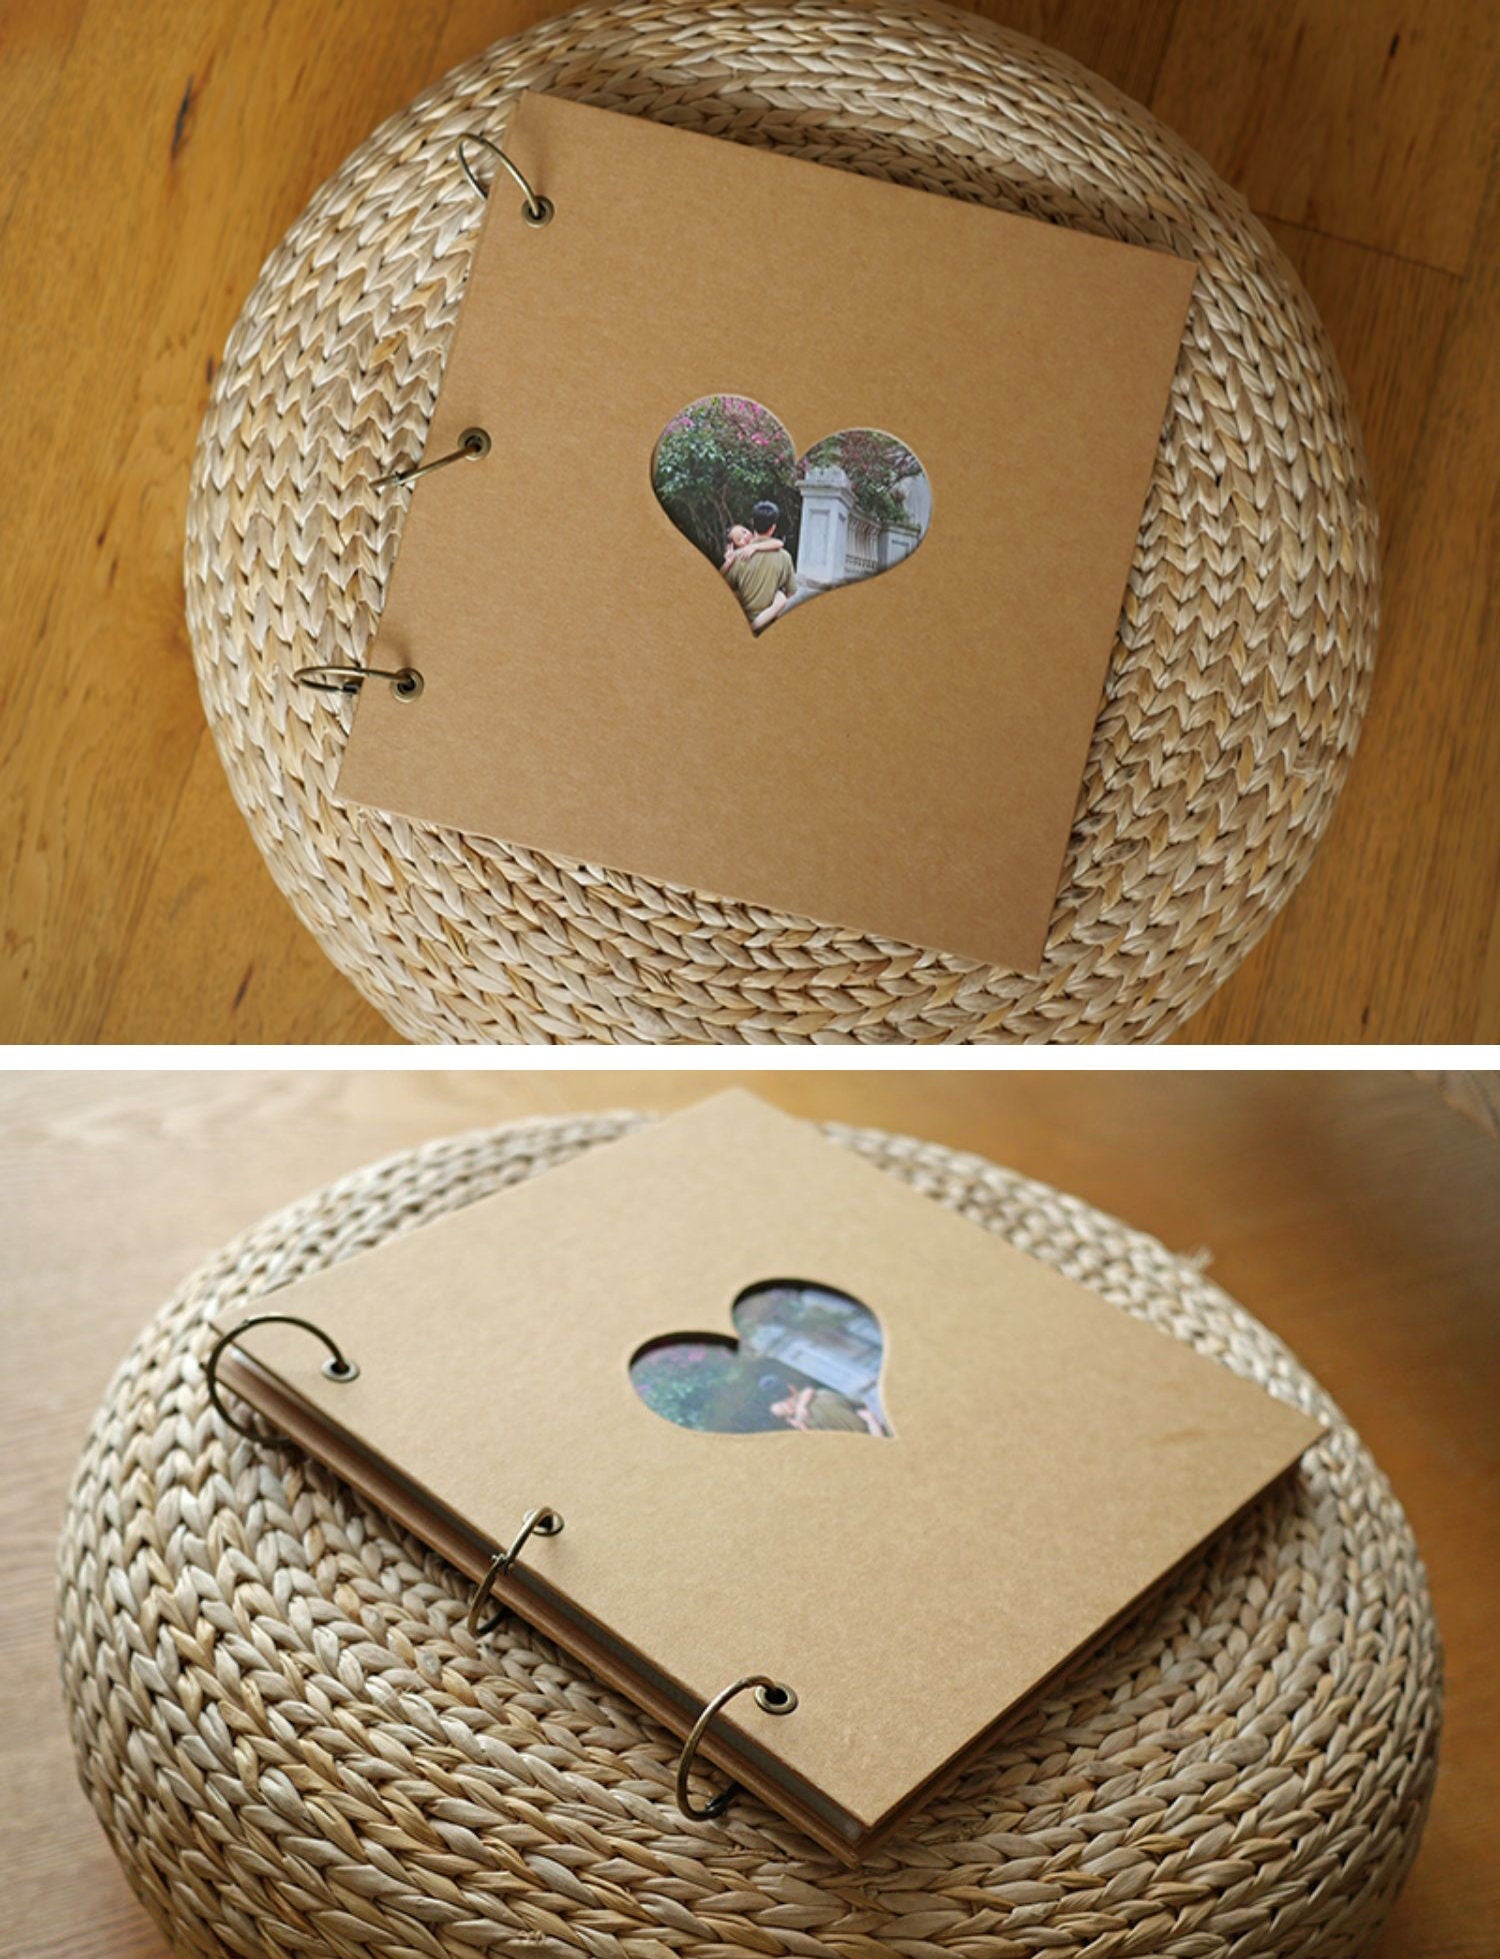 Kraft Paper Love Scrapbook Album Square Handmade Baby Growth Album Wedding Guest Book. Pocket Travel Photo Book. DIY Couple Photo Album 50P